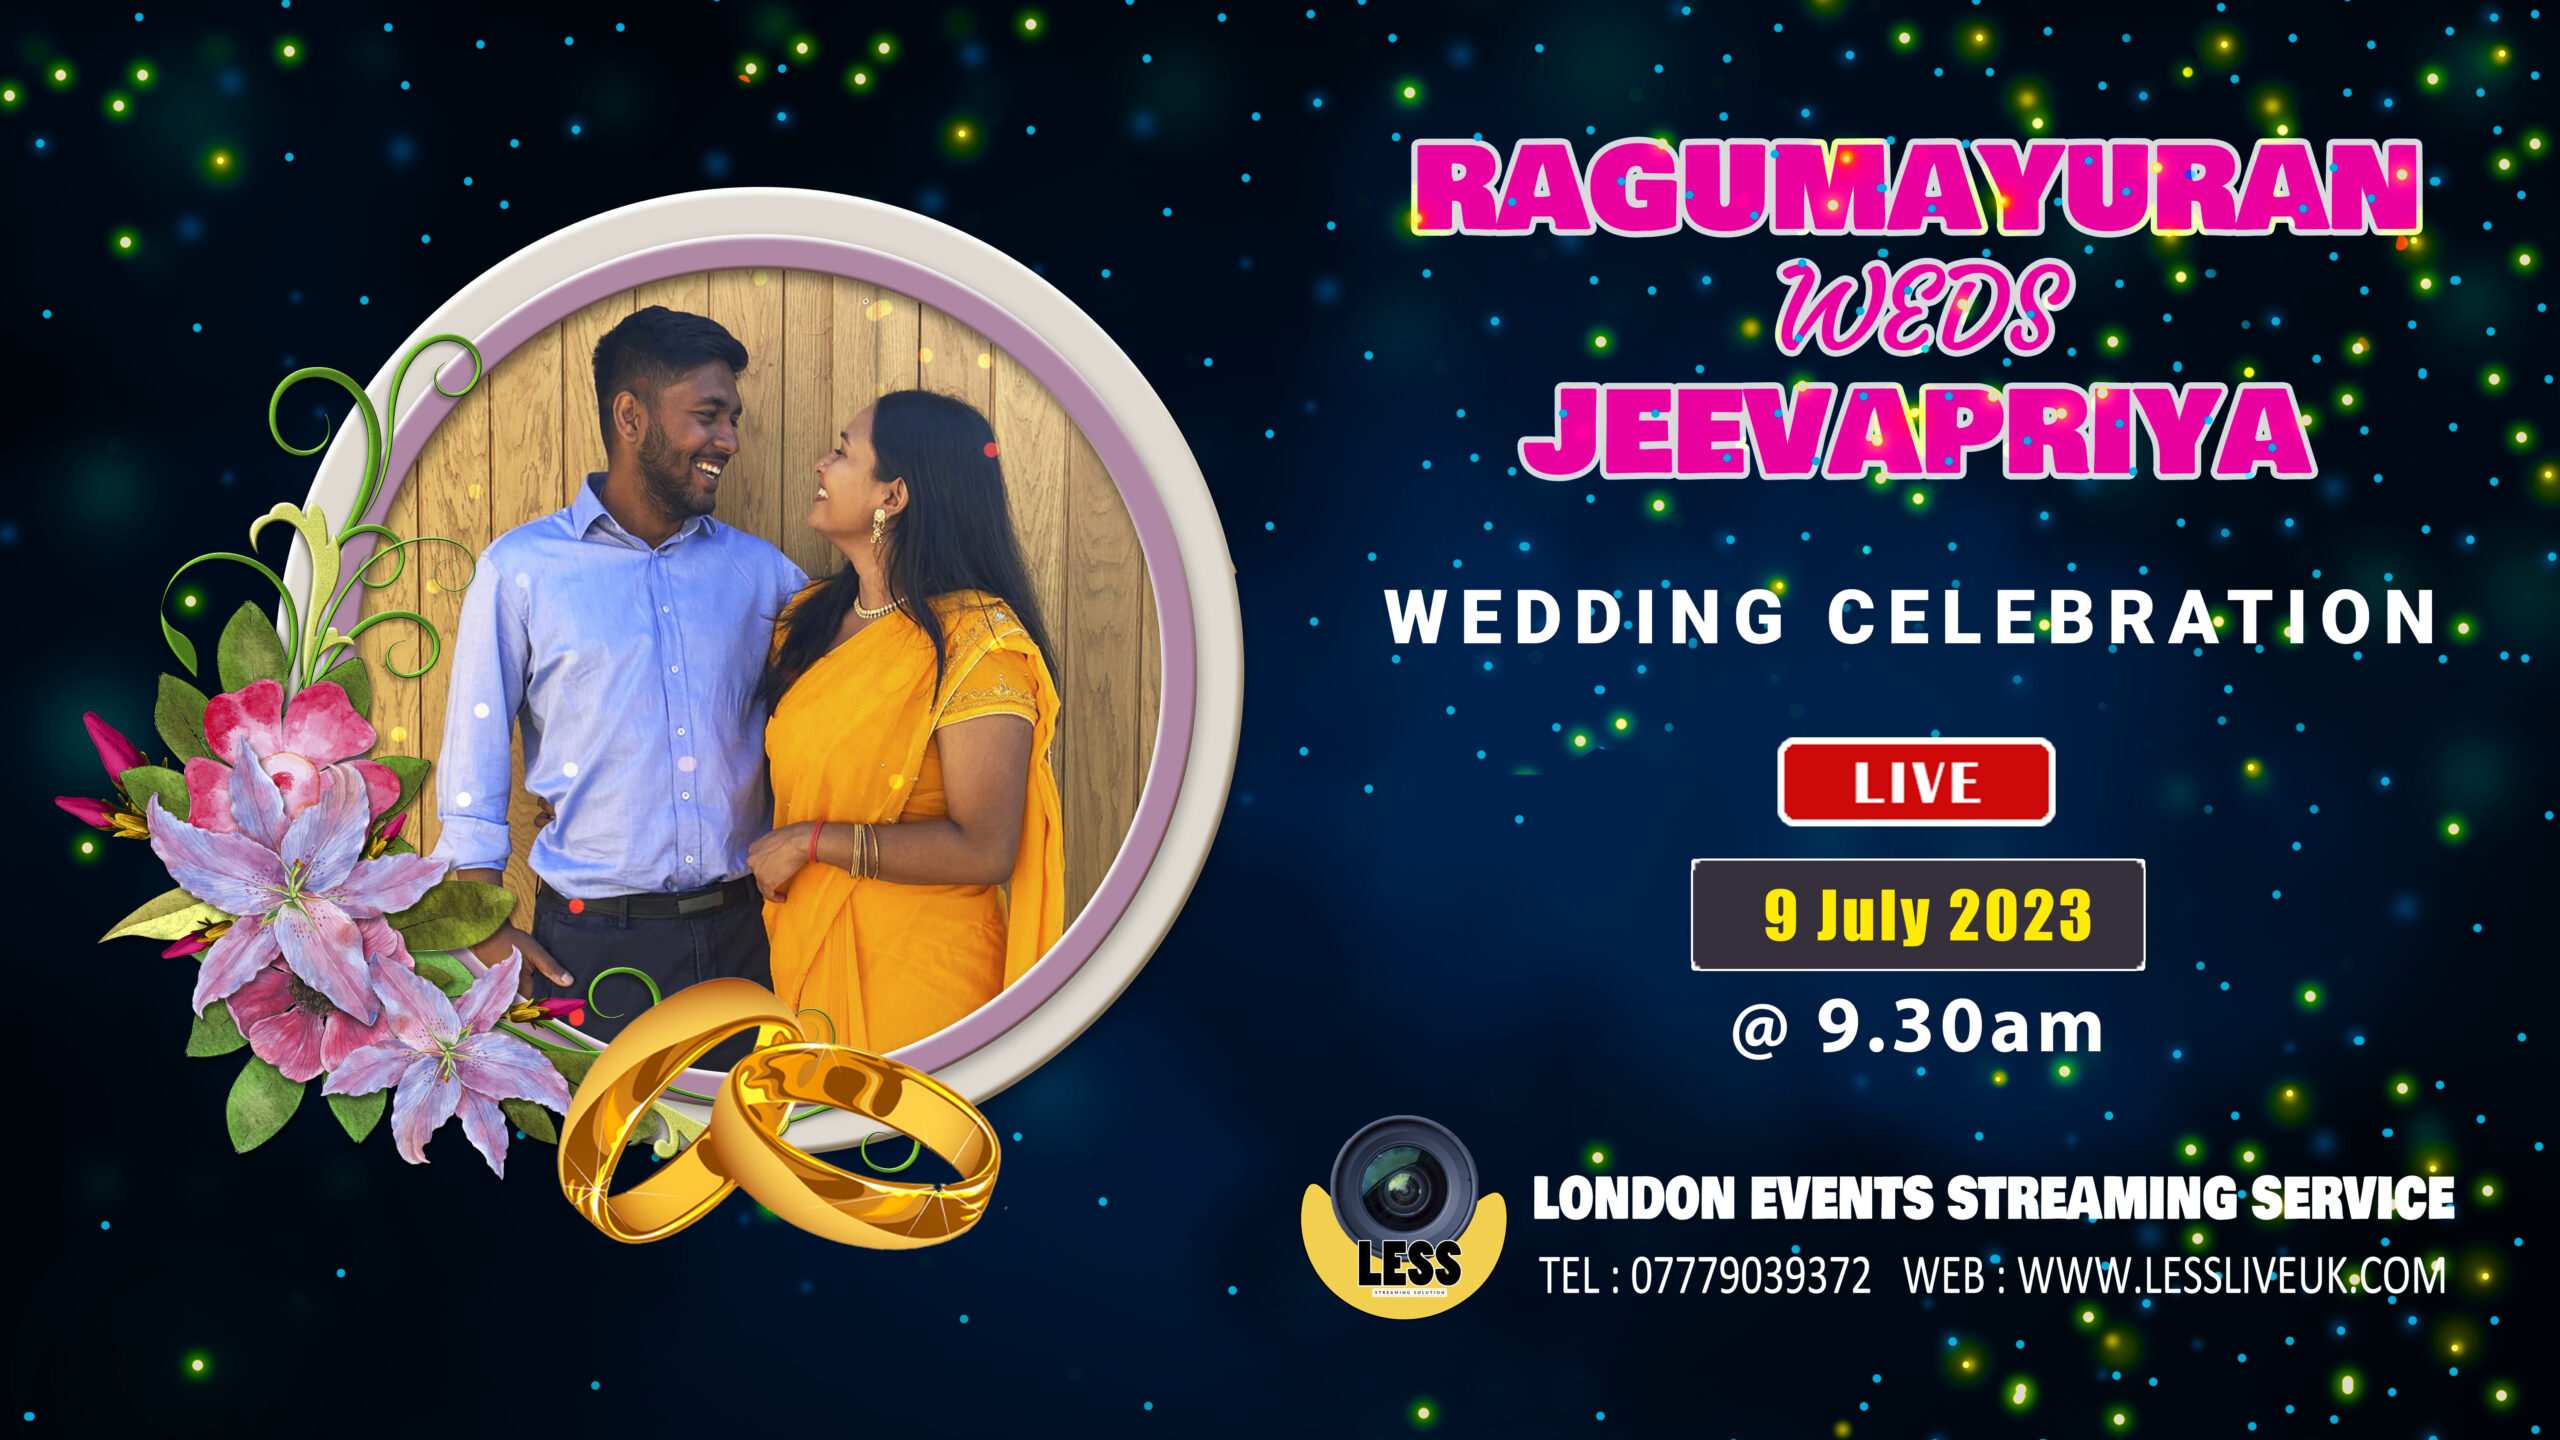 Ragumayuran Weds Jeevapriya - Wedding Celebration Live - 9 July 2023